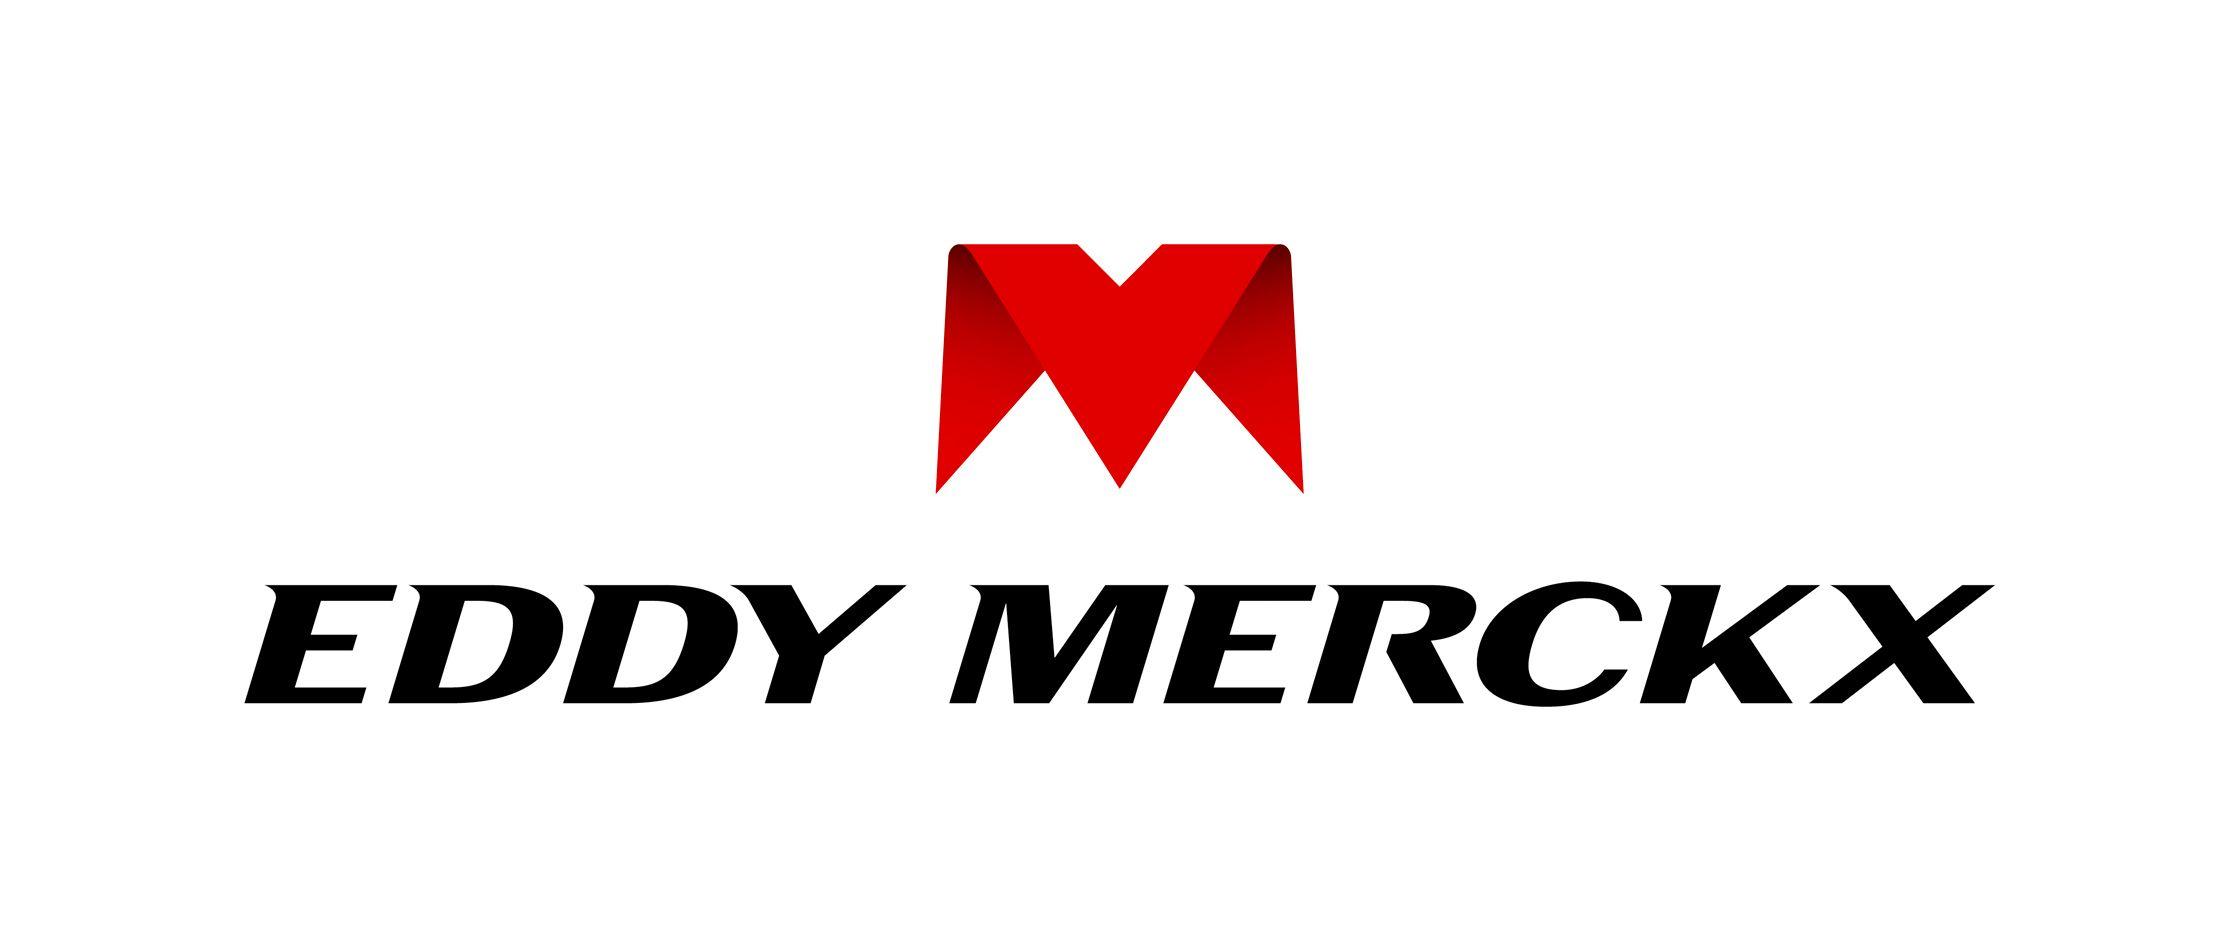 Eddy Logo - Eddy Merckx